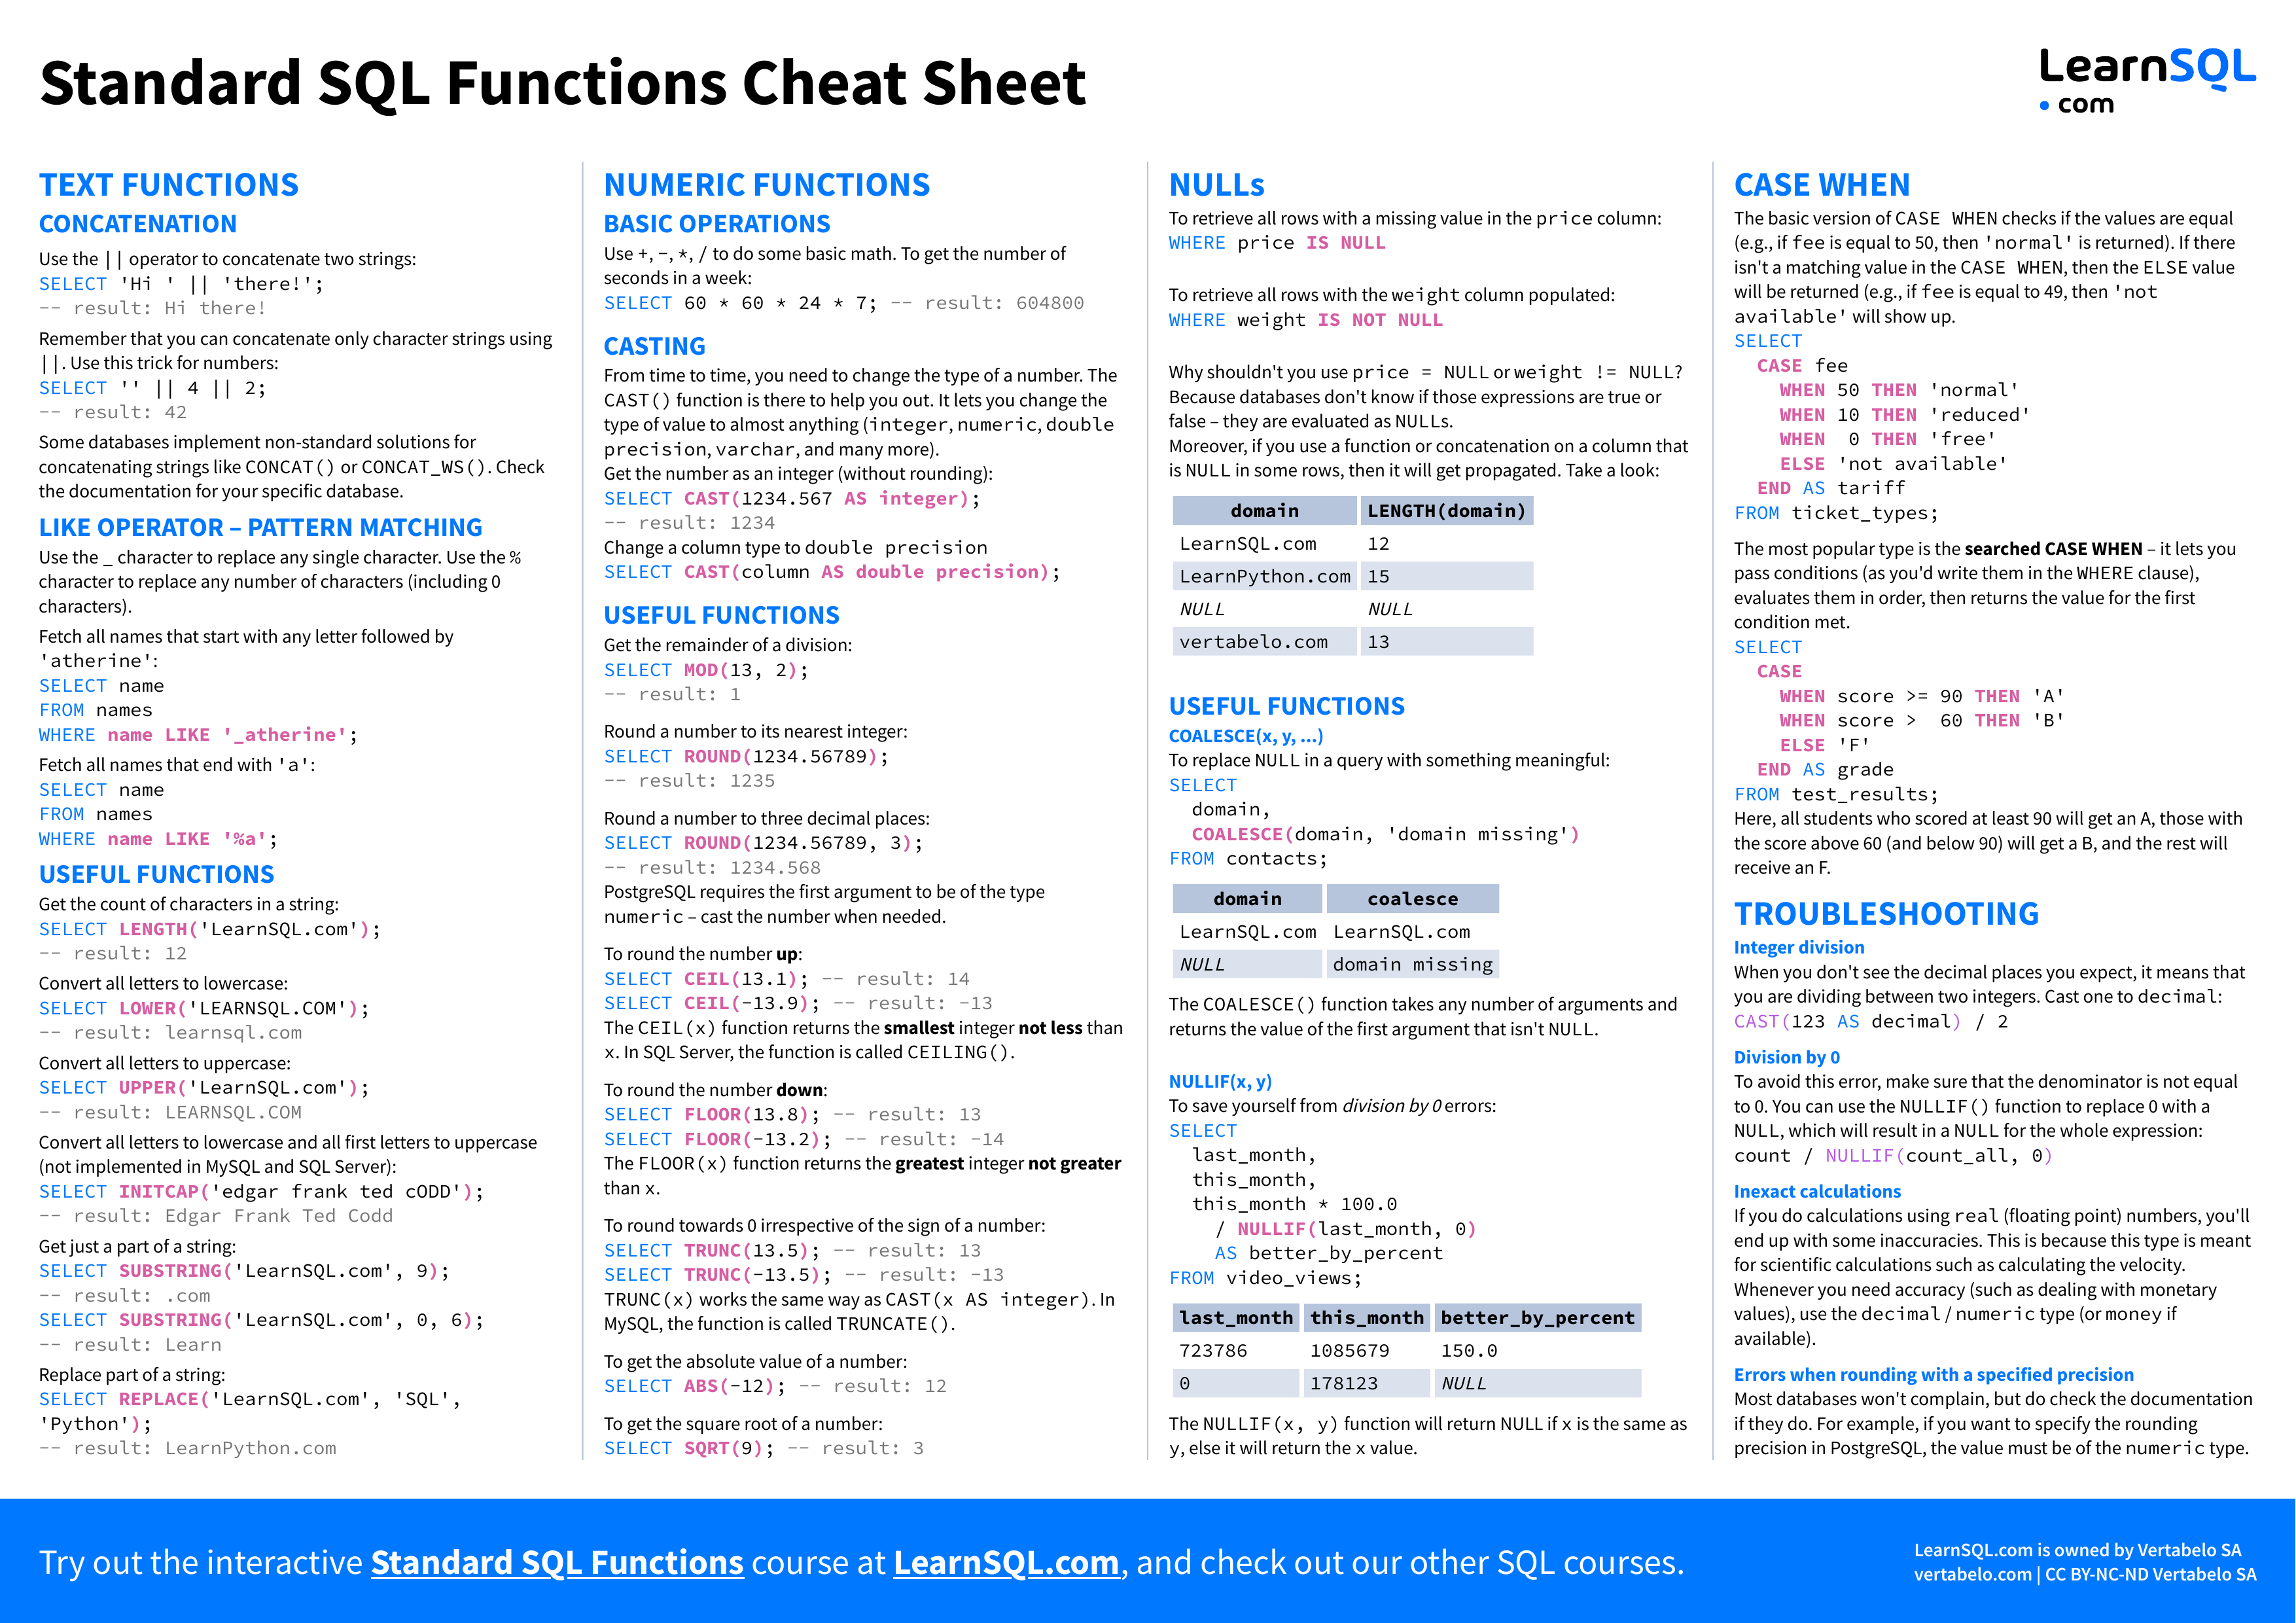 standard-sql-functions-cheat-sheet-learnsql